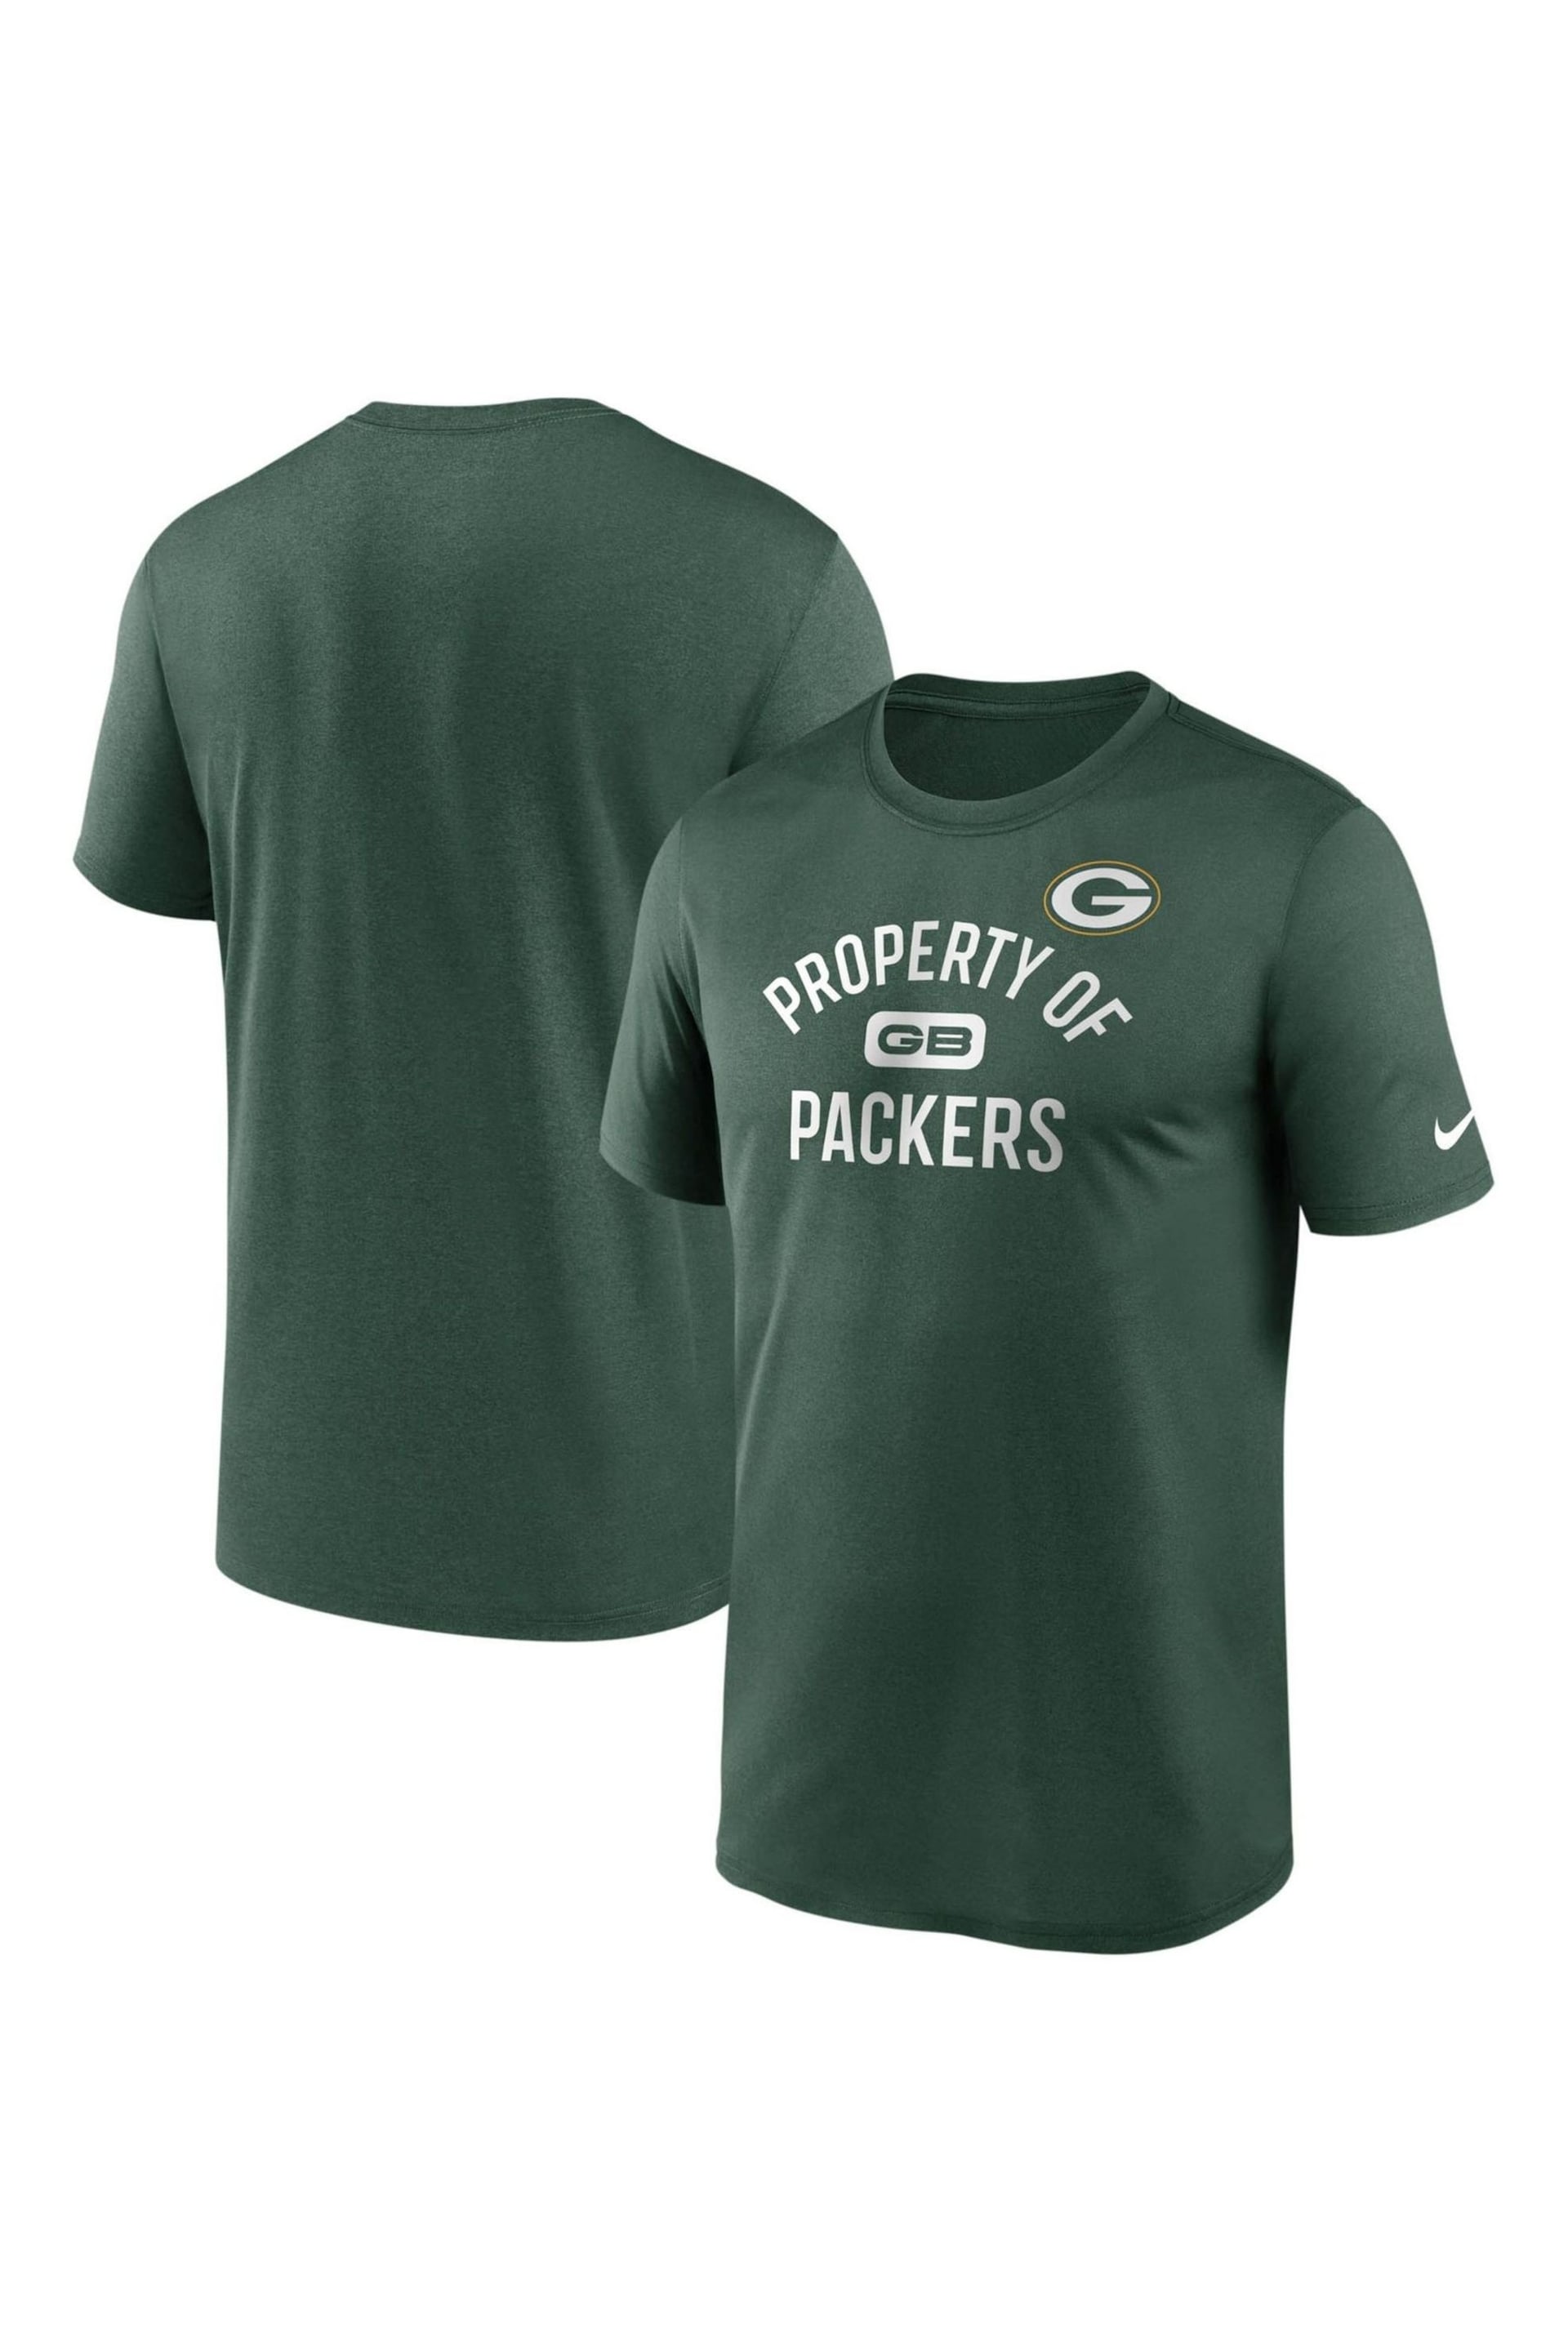 Nike Green NFL Fanatics Green Bay Packers Property of T-Shirt - Image 1 of 3